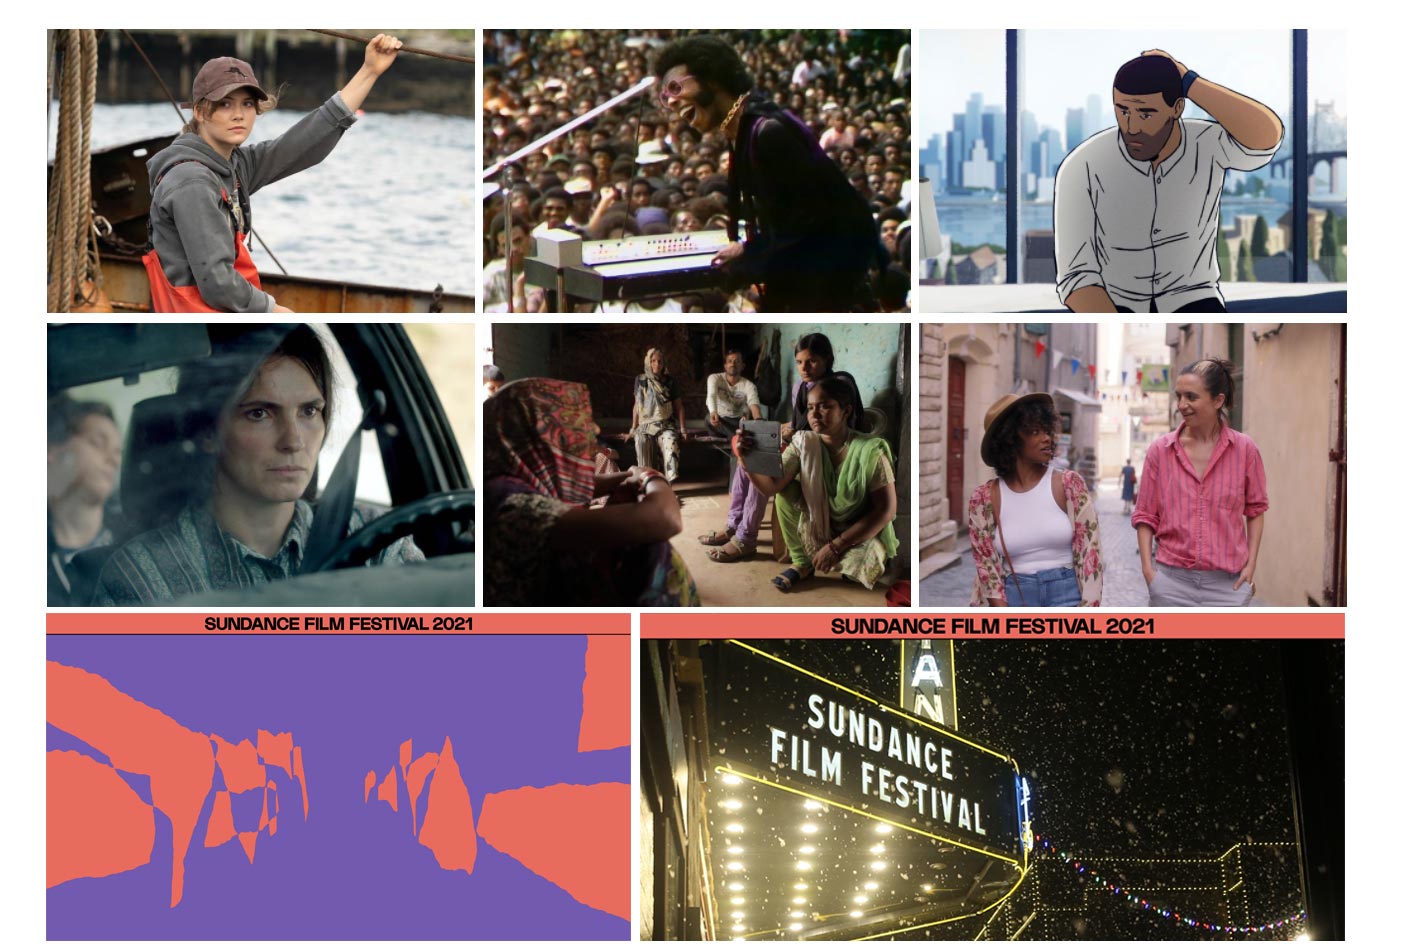 2021 Sundance Film Festival Awards announced